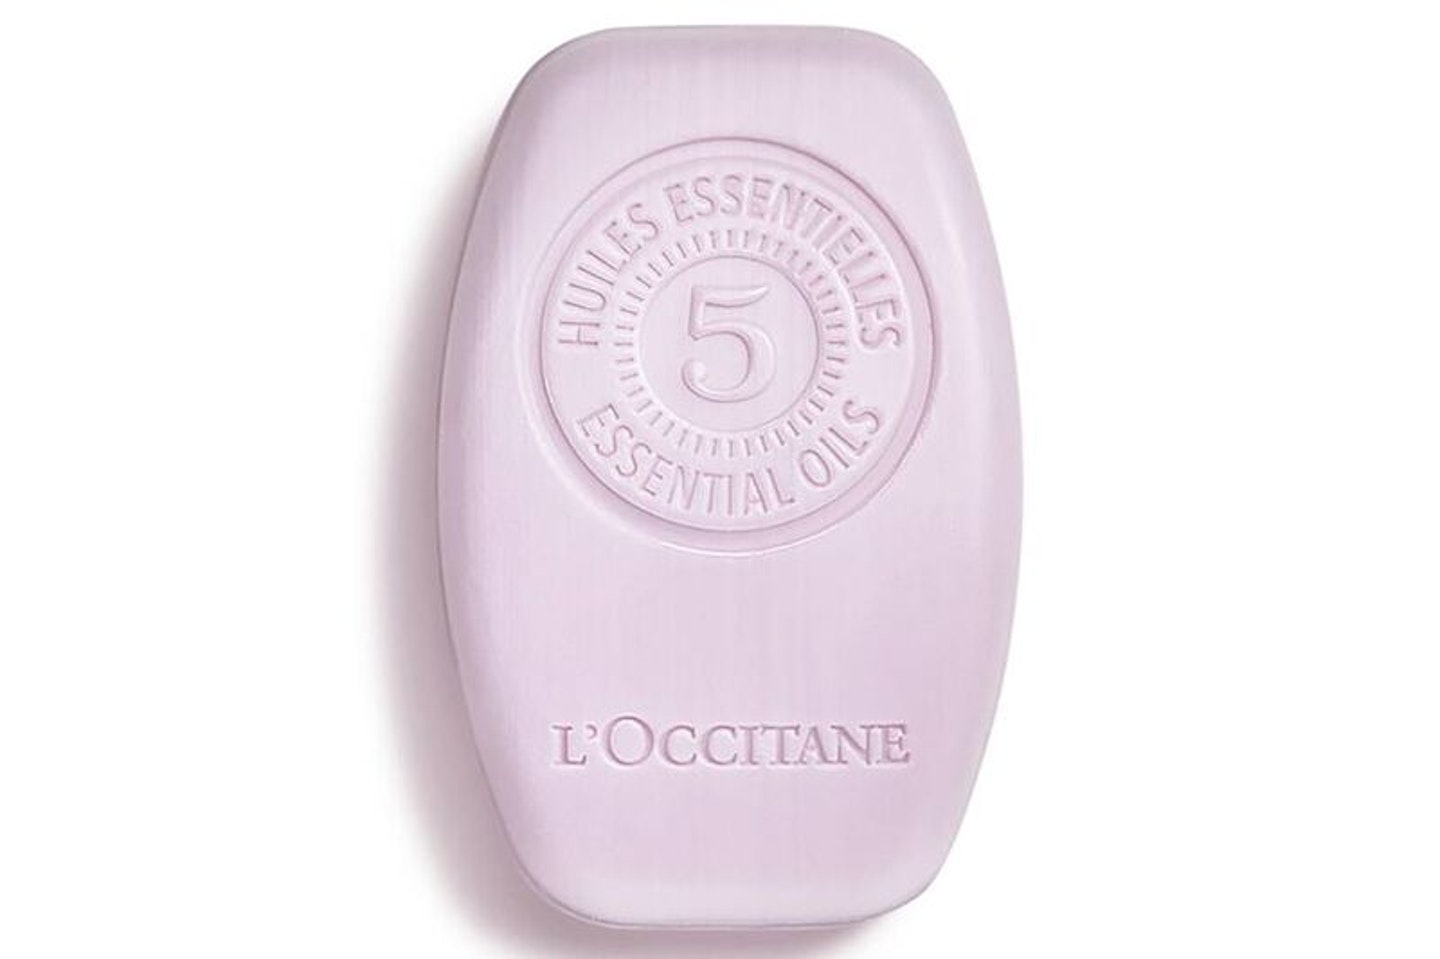 L'Occitane Gentle & Balance Solid Shampoo, £10